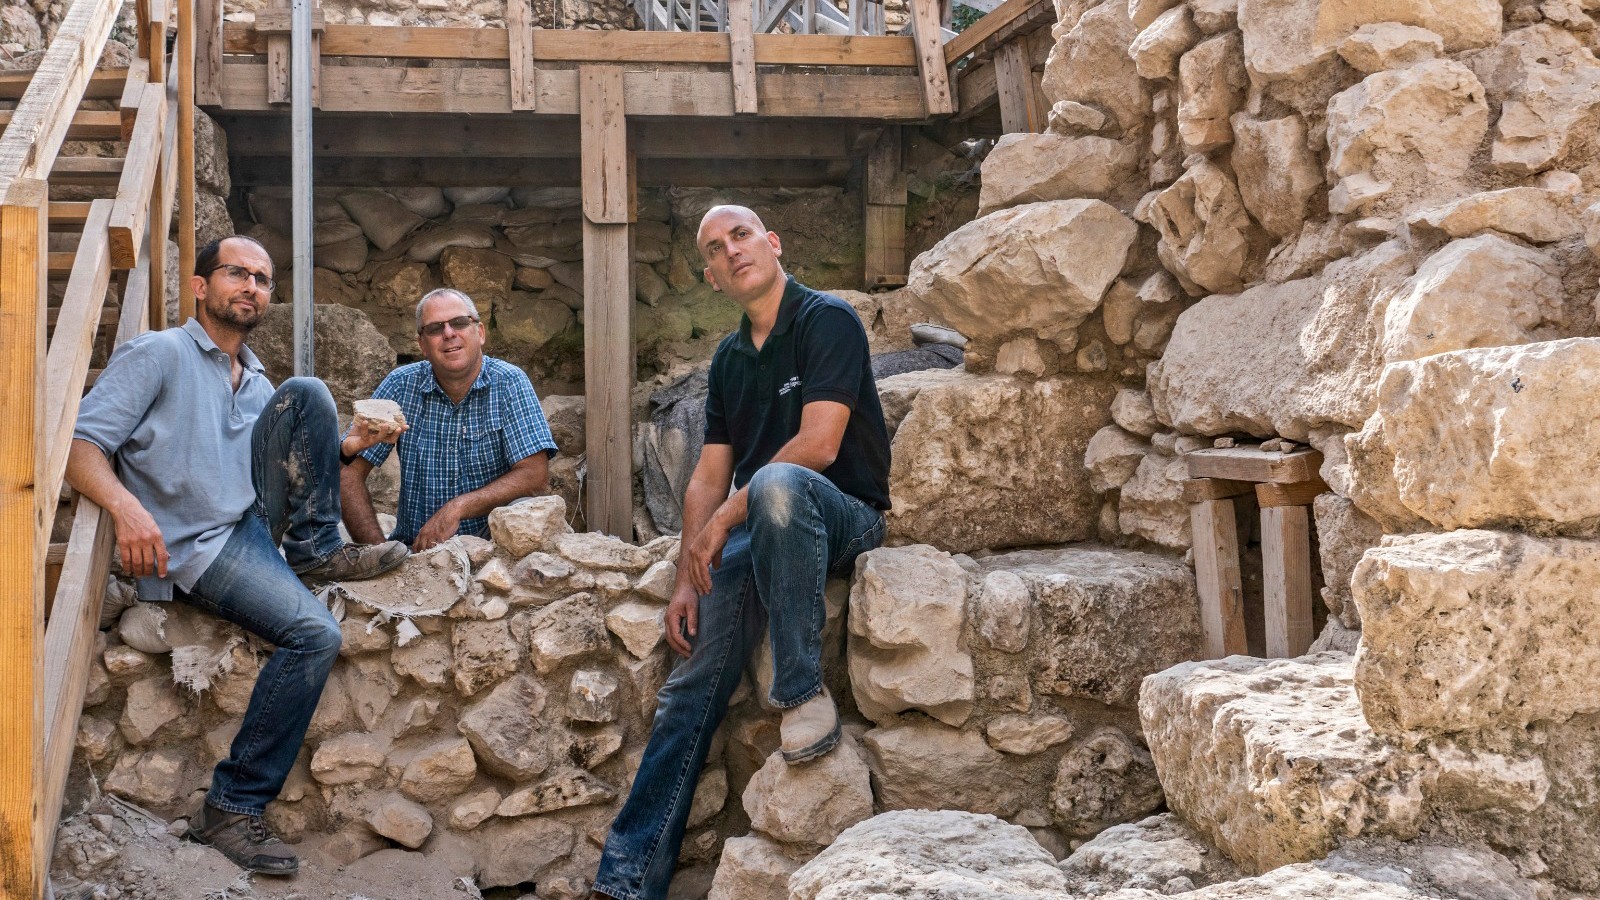 From left, Yoav Vaknin, Prof. Gadot, Dr. Shalev. Photographer Shai Halevi Israel Antiquities Authority